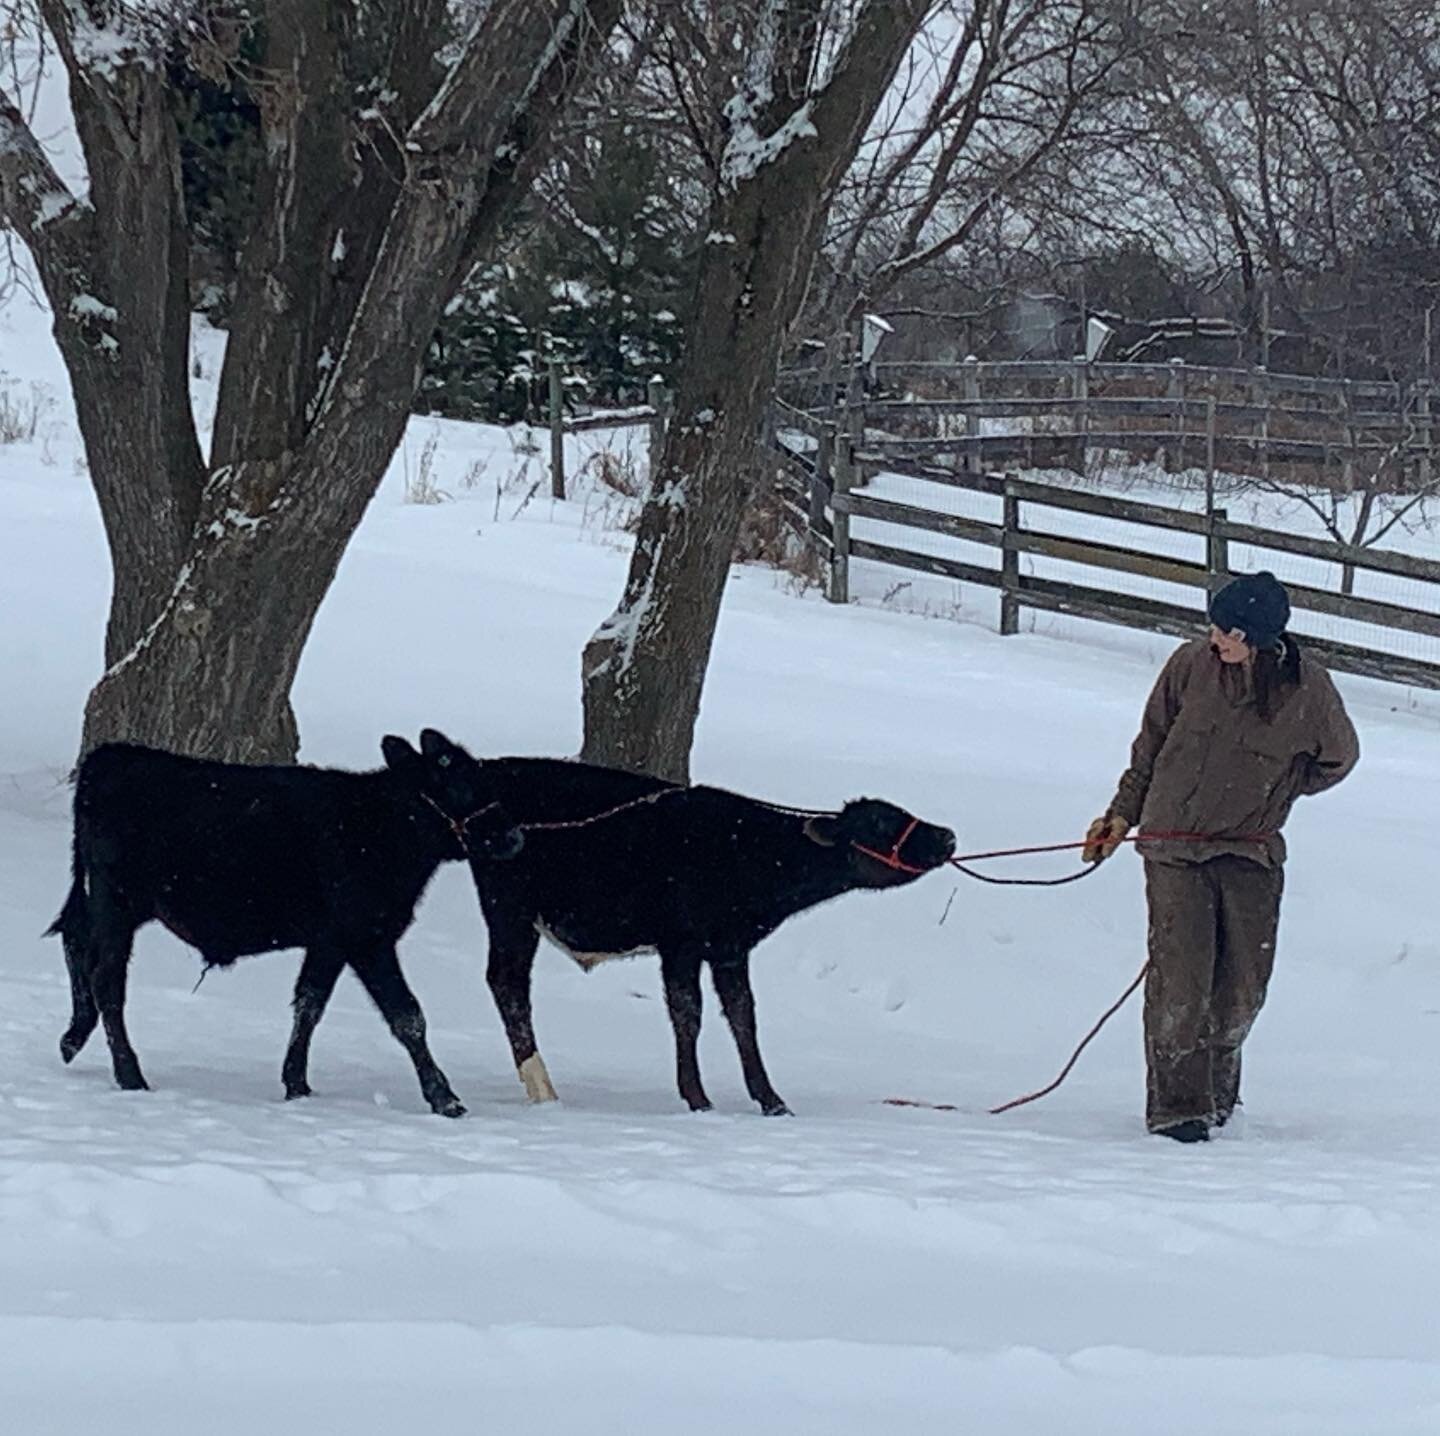 Farmer Laura, the calf trainer extraordinaire! #farmstrong #showsteers #mn #winterwonderland #farm